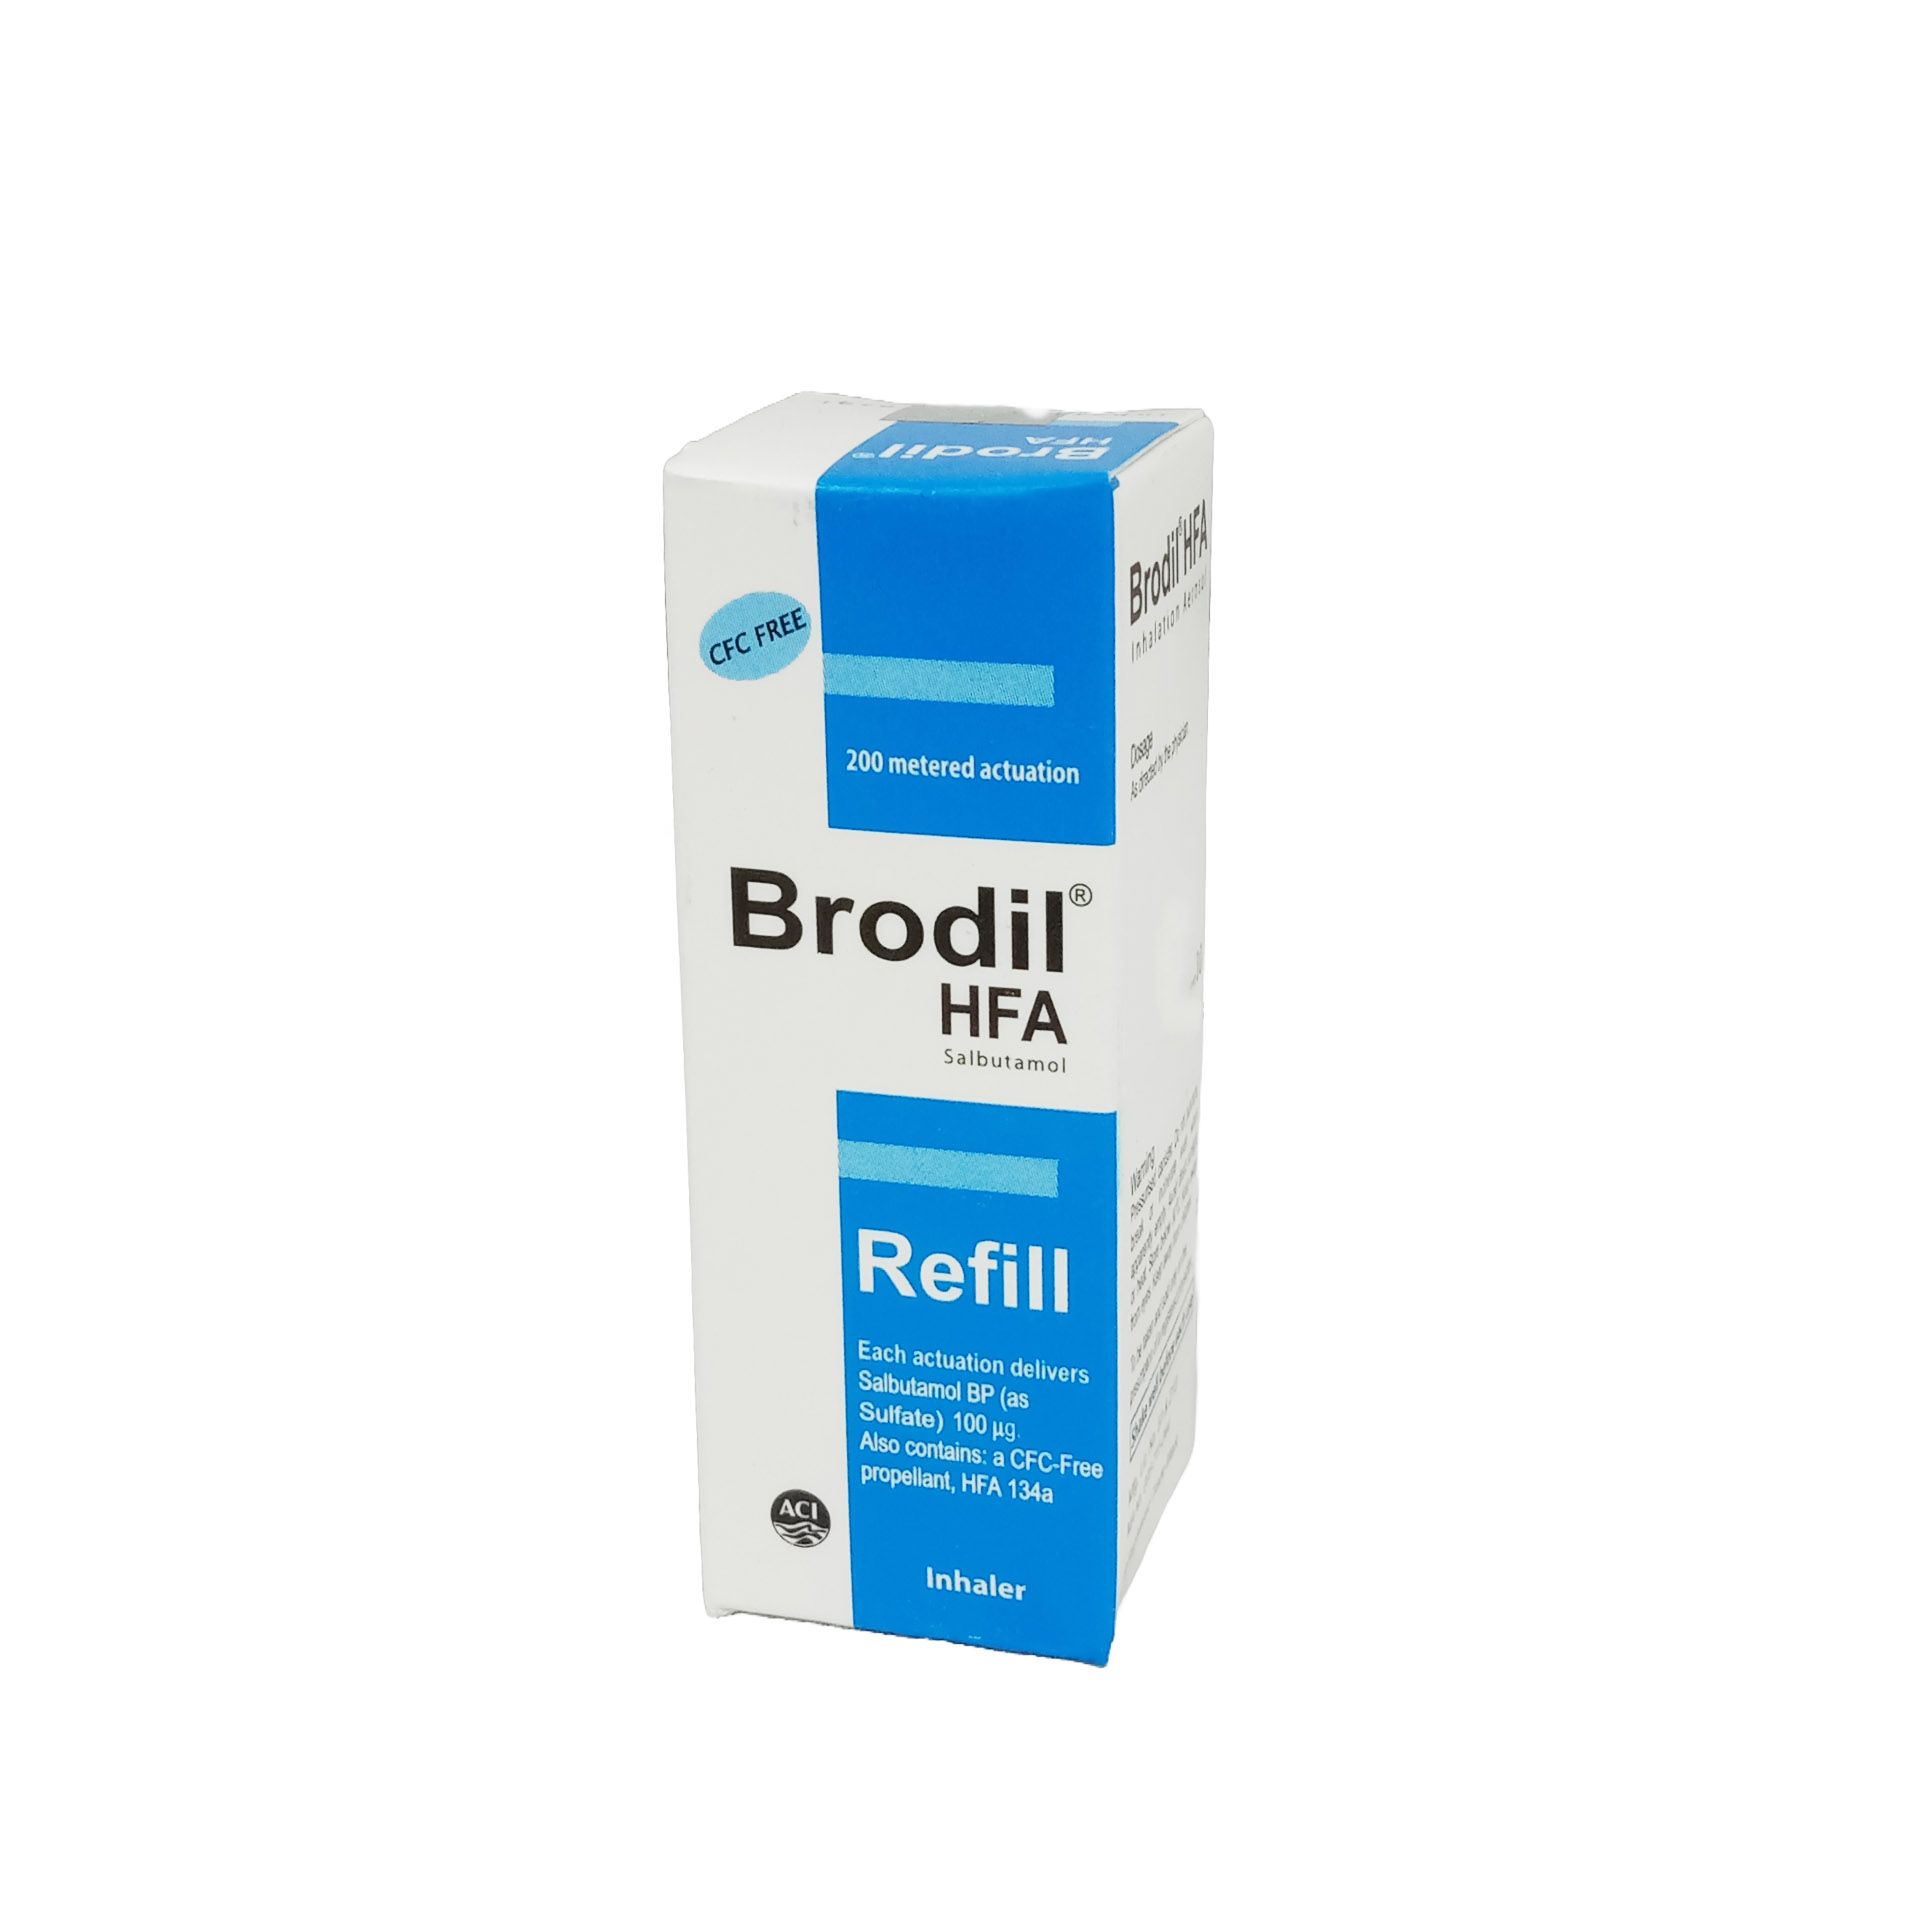 Brodil HFA Refill 100mcg/puff Inhaler